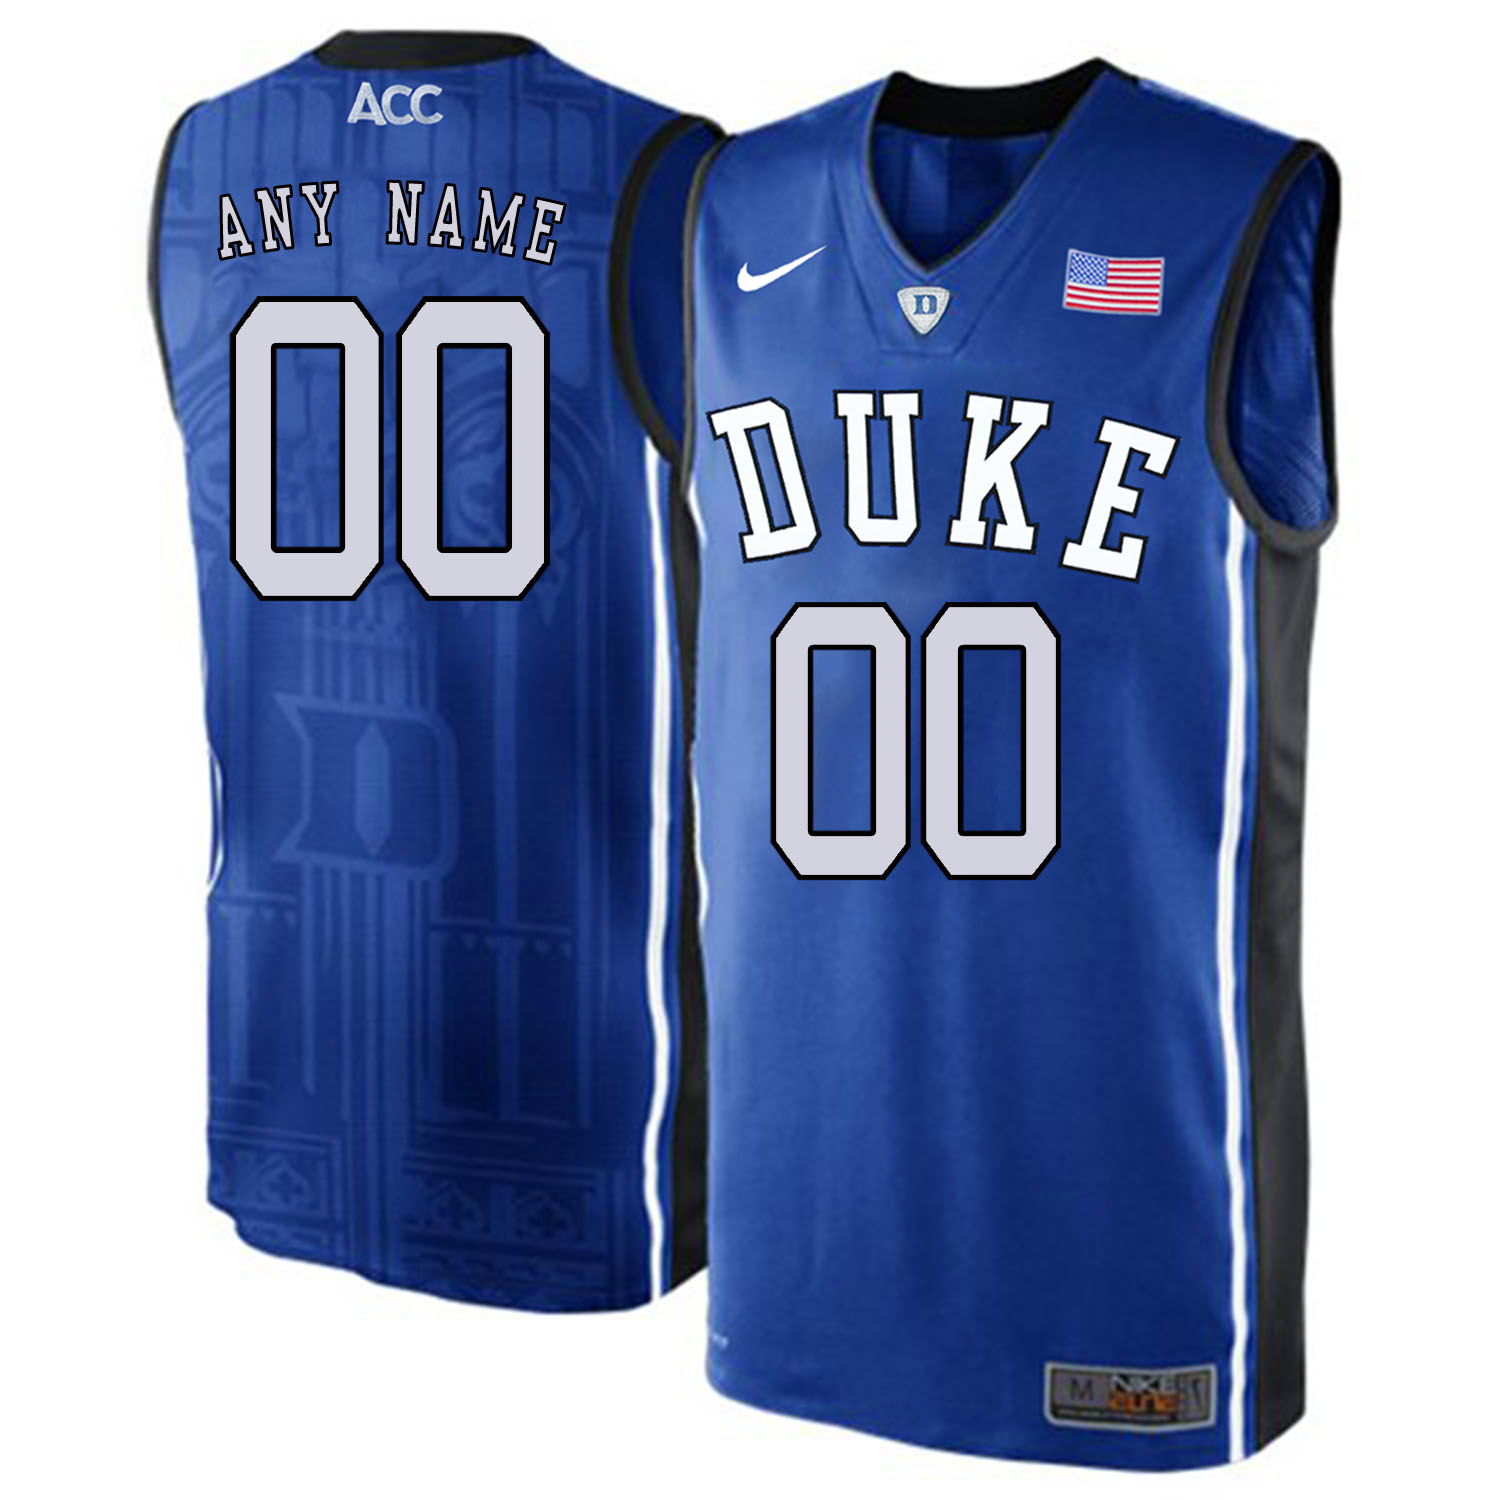 Duke Blue Devils Men's Customized Blue Elite Nike College Basketball Jersey